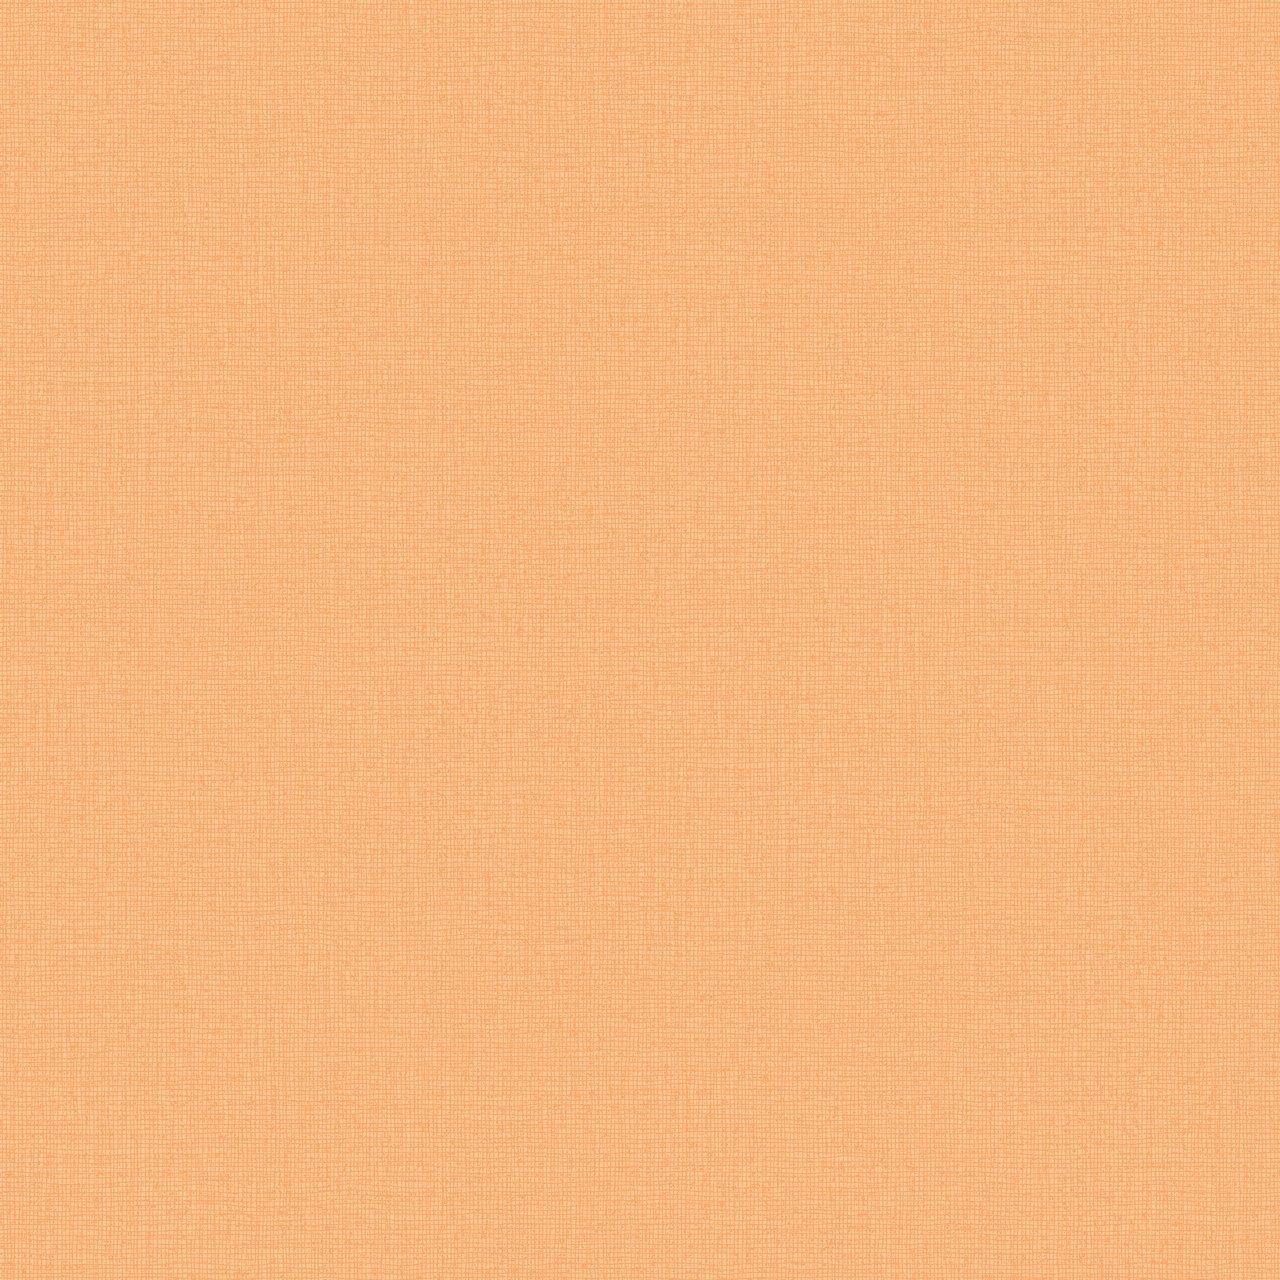 Plain Orange Wallpapers - Wallpaper Cave